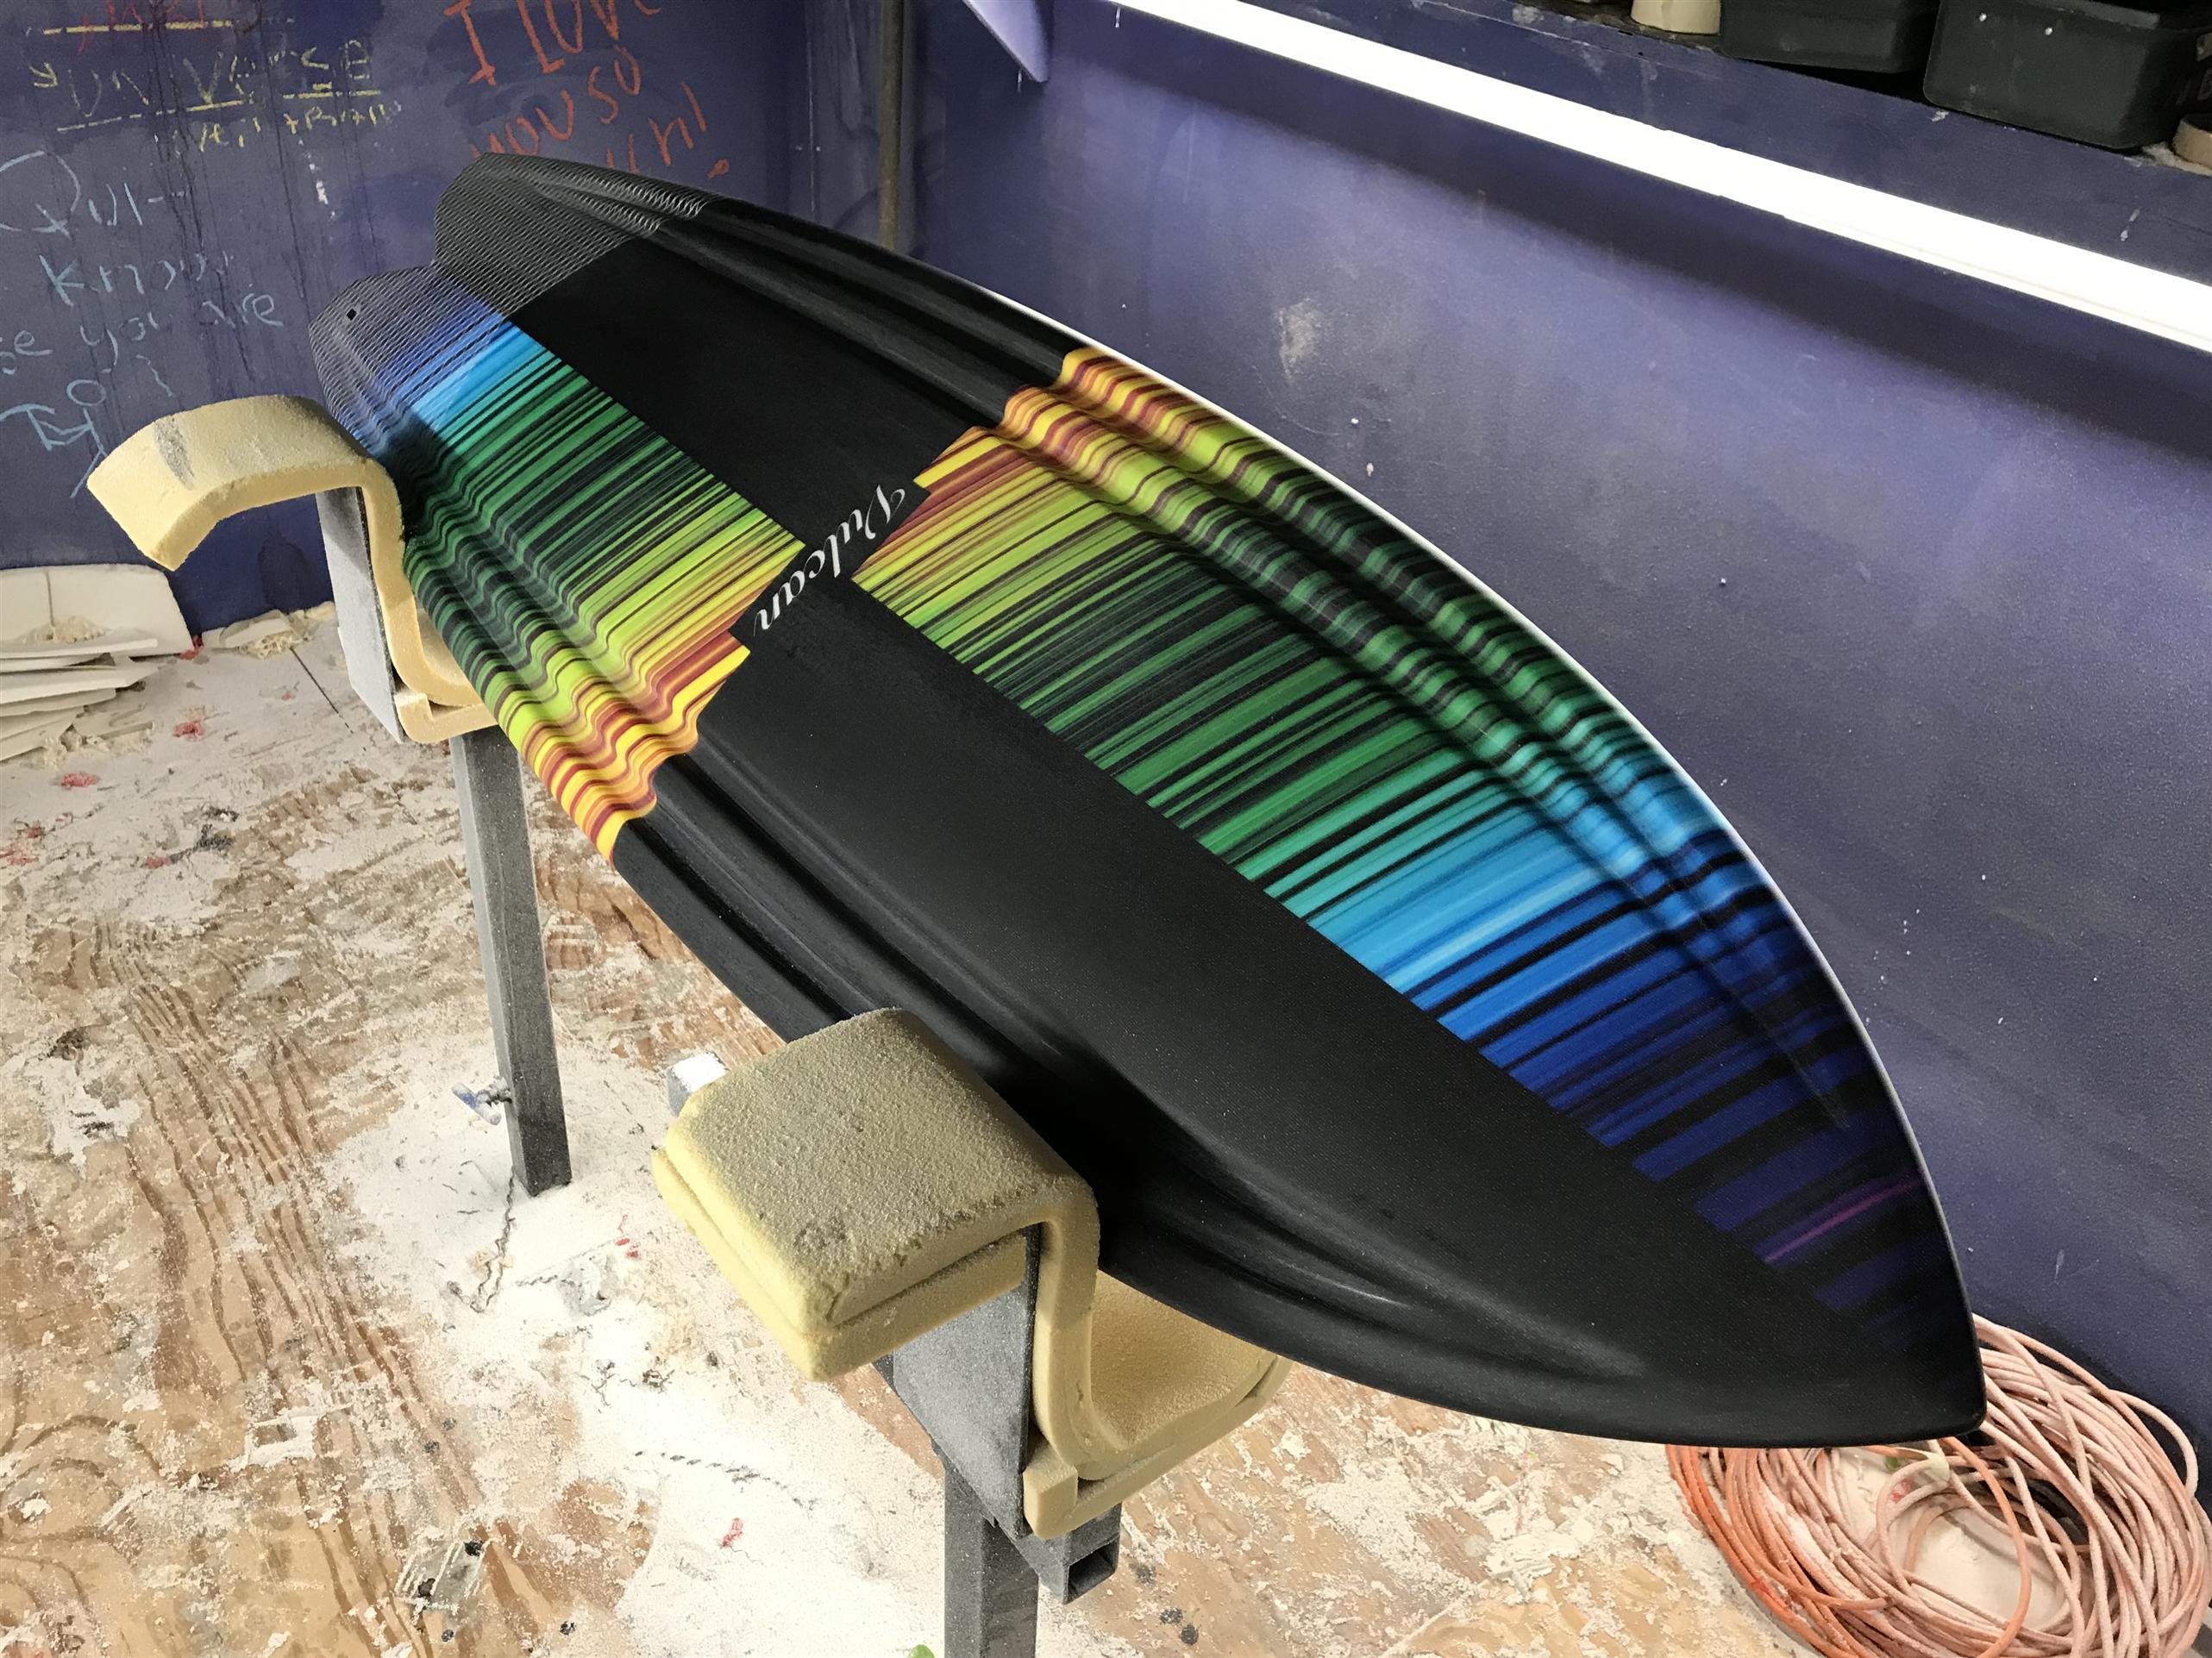 Vulcan Surfboards - About LightDrive